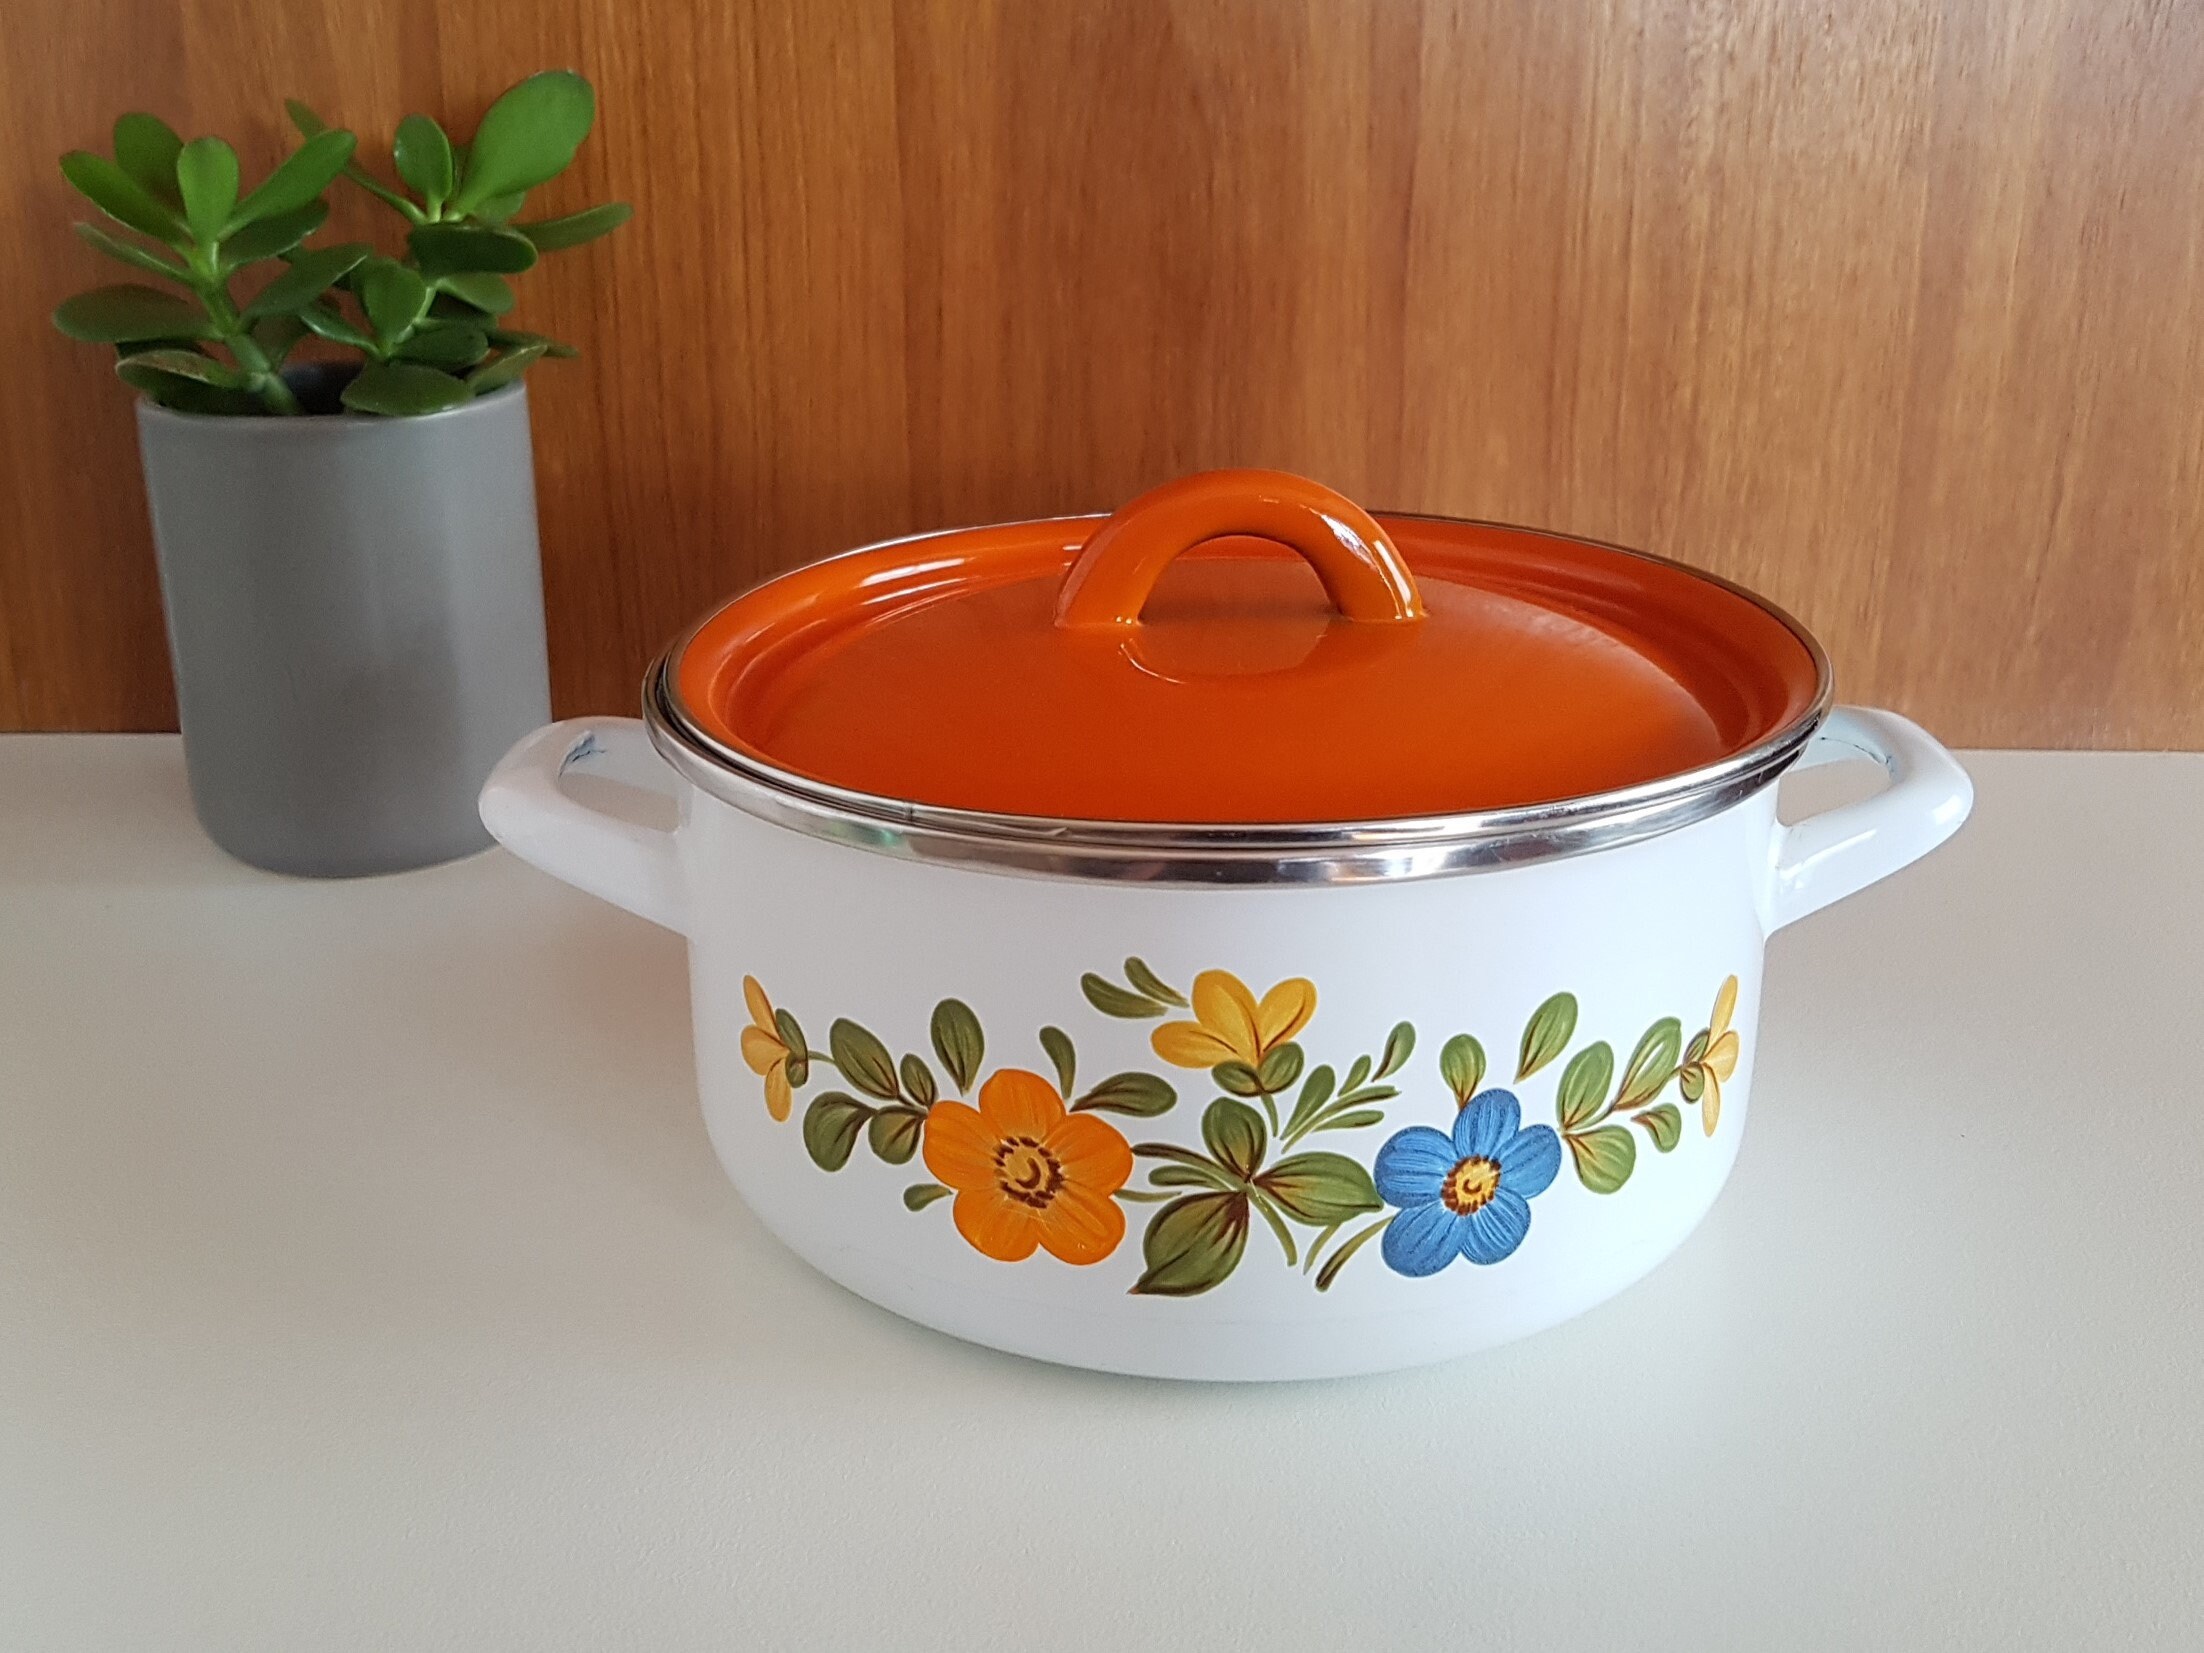 Vintage Large Enamel Dutch Oven Cooking Pot, Green With Retro Floral  Design. 